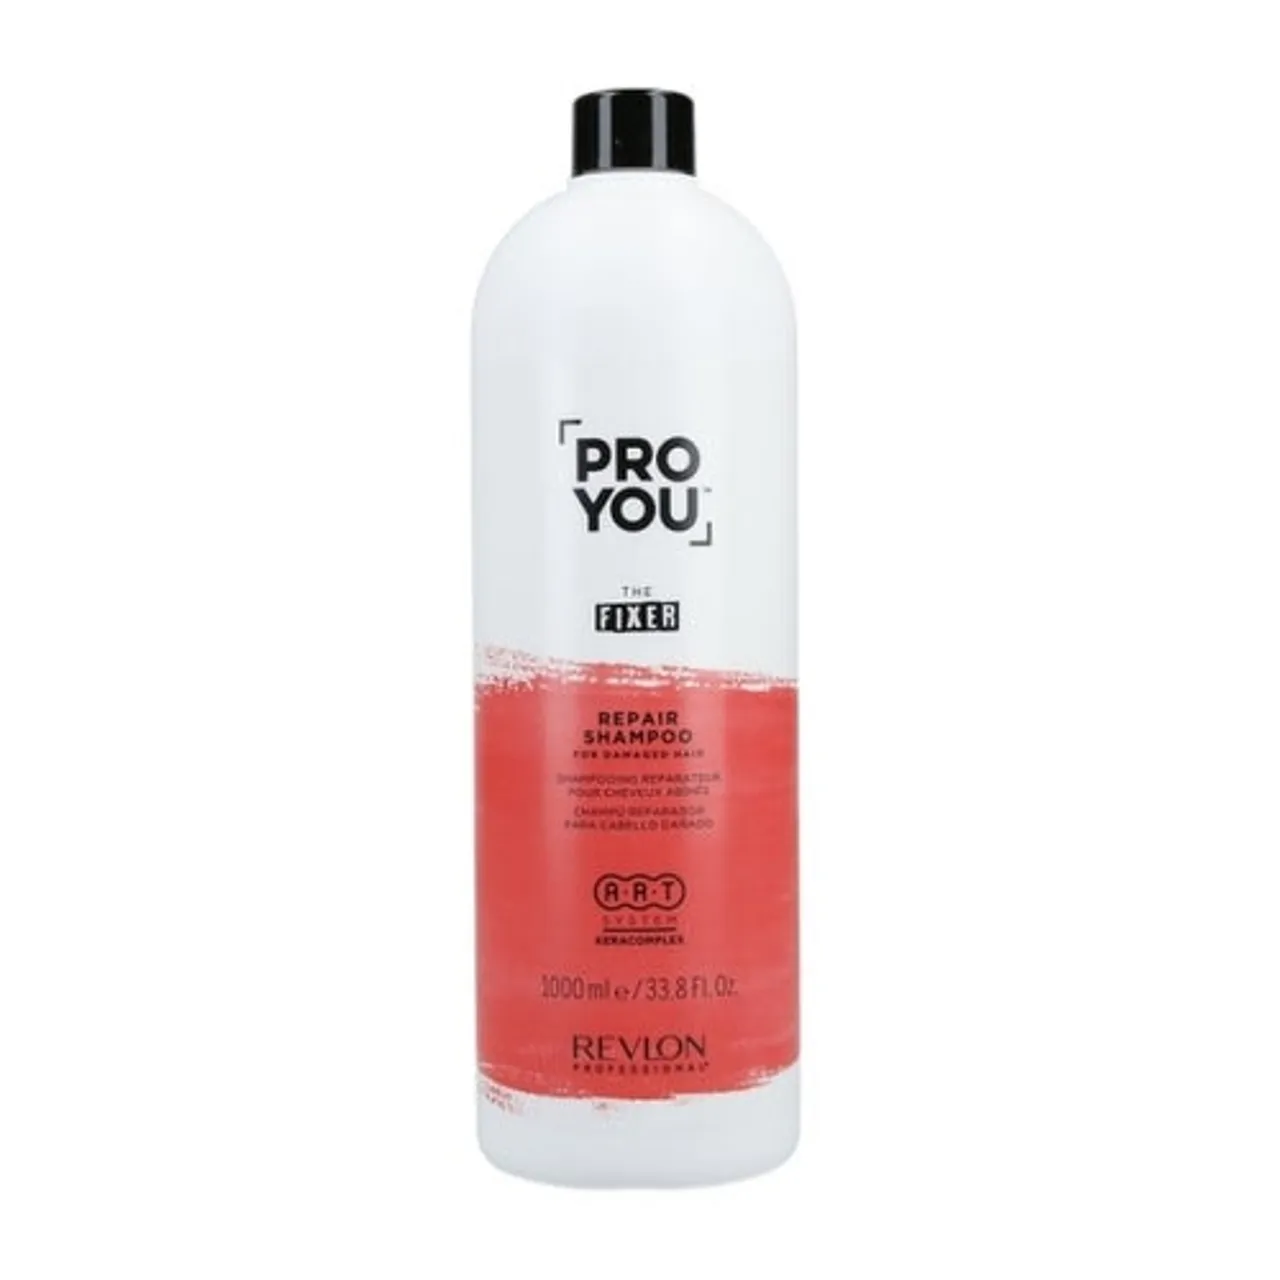 Revlon Pro You The Fixer Repair Shampoo 1000 ml